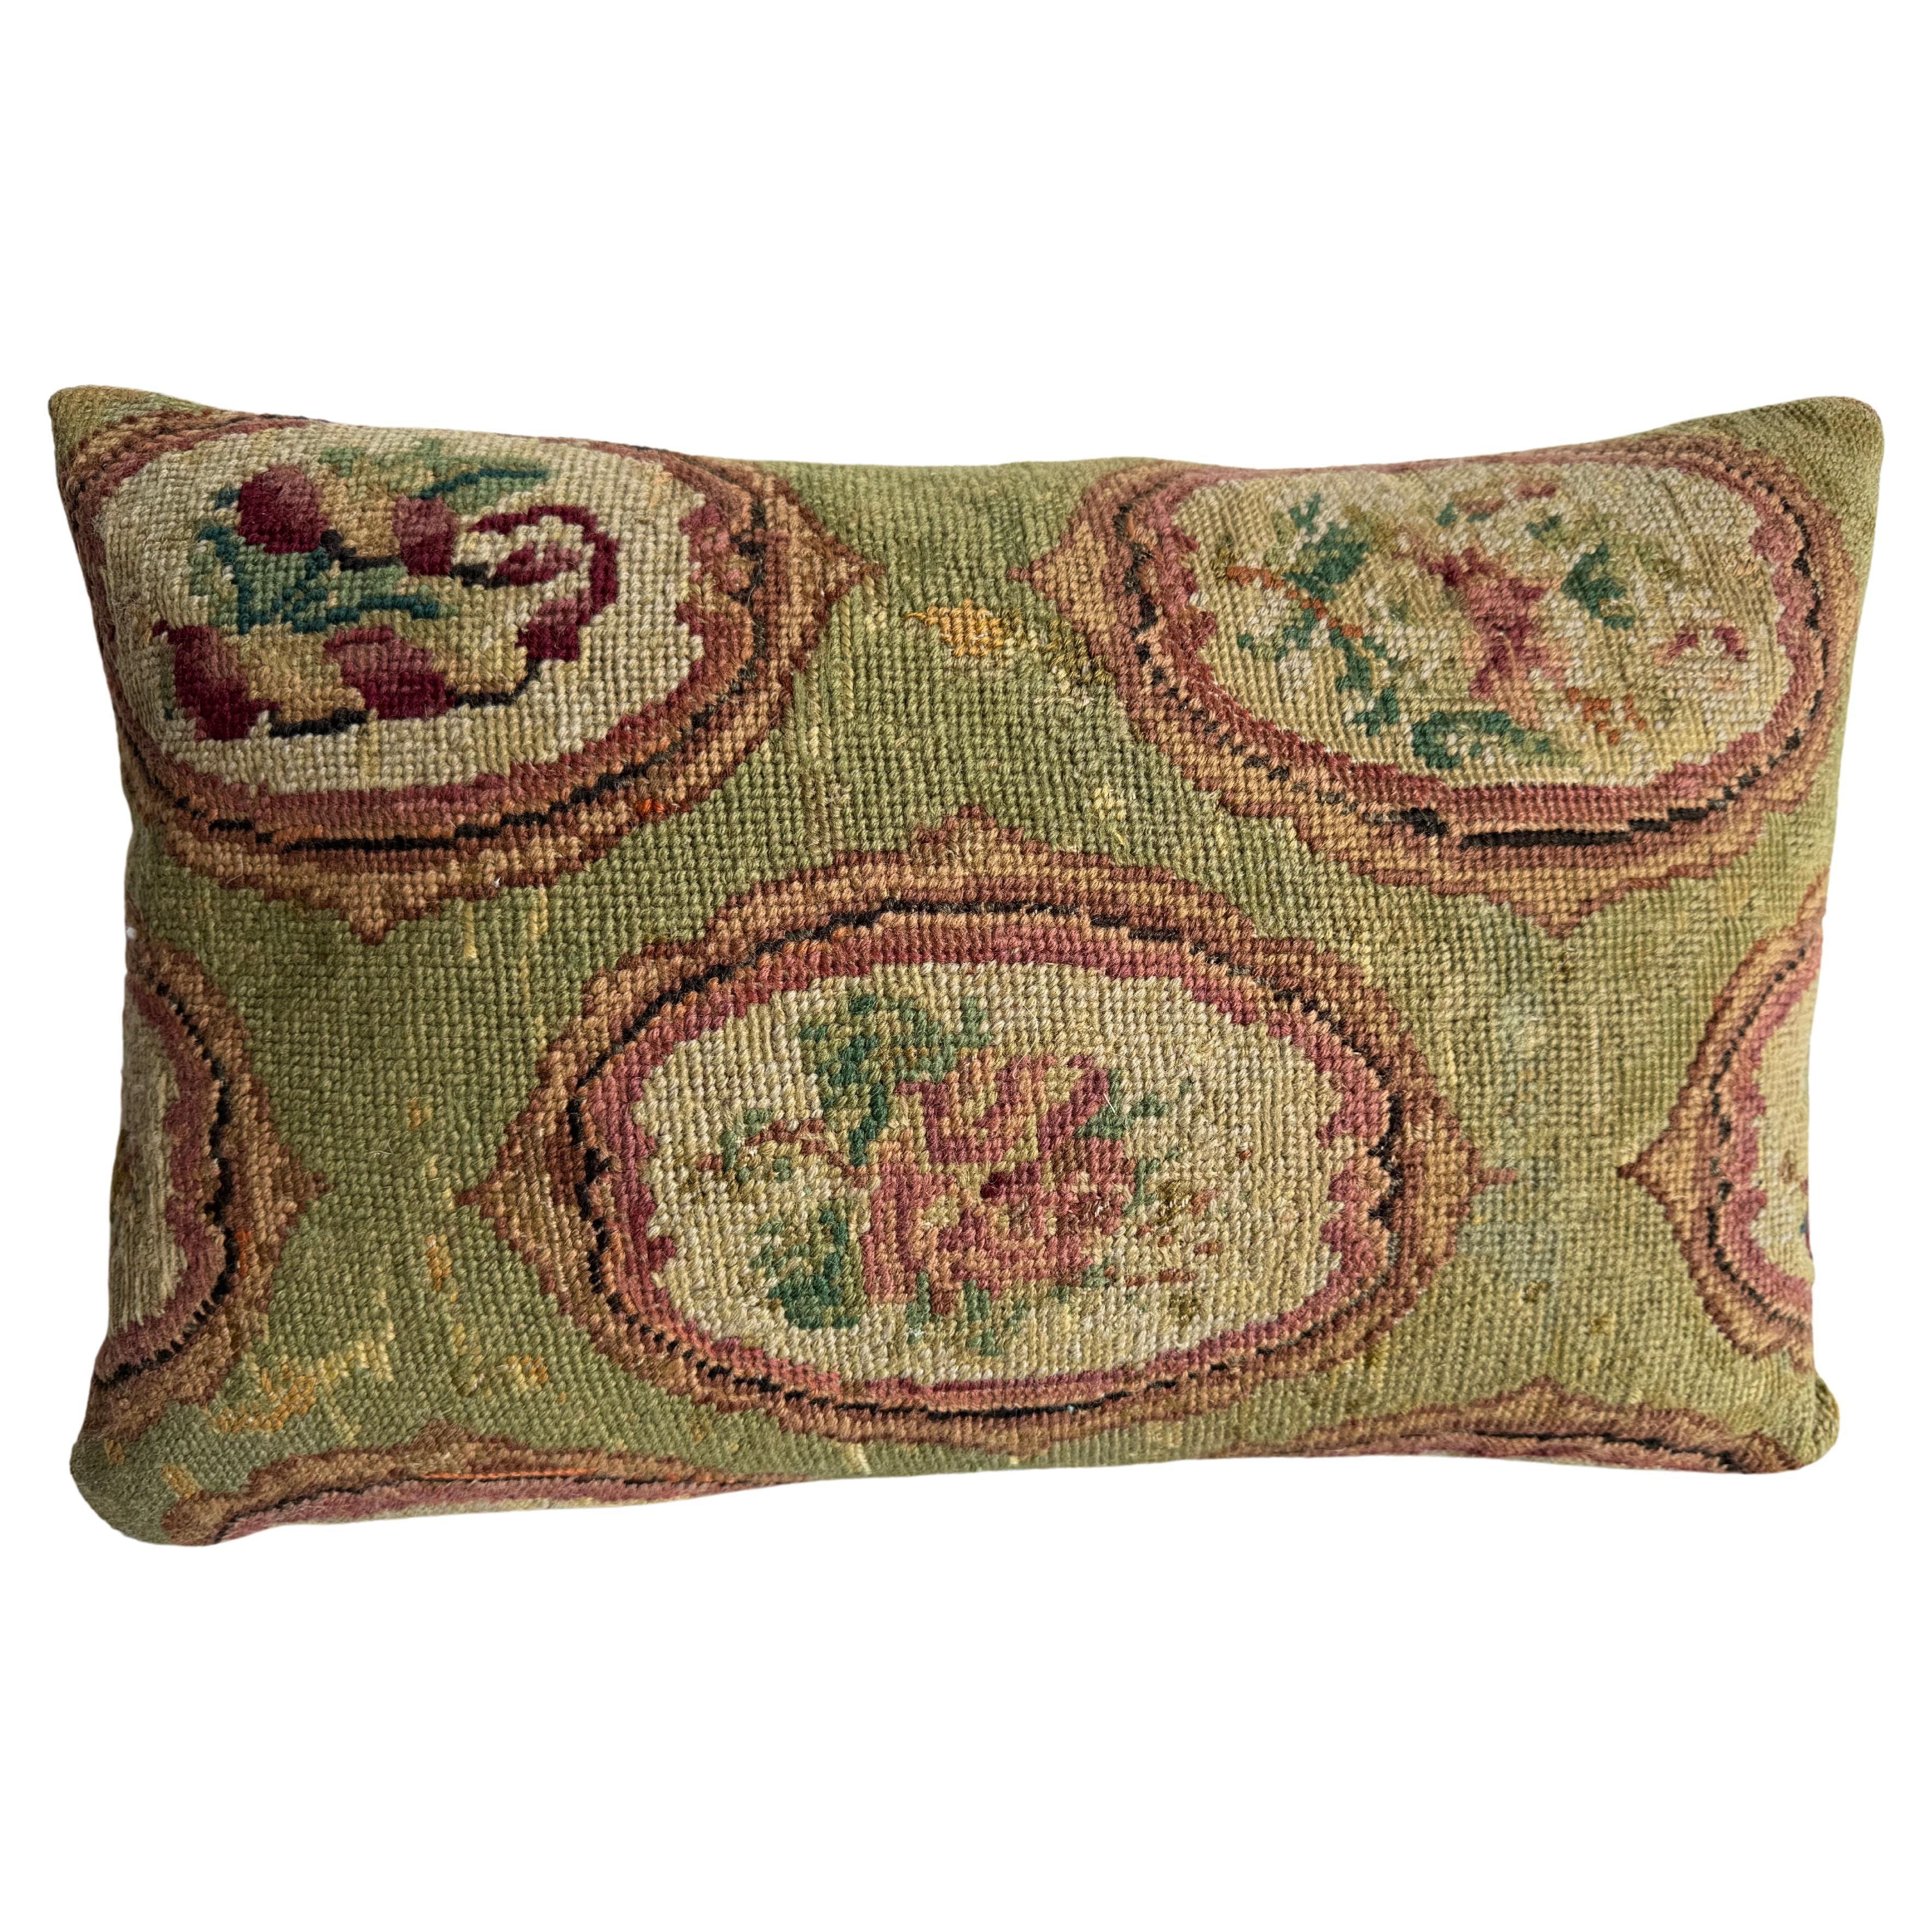 1853 English Needlework 12" x 18" Pillow For Sale